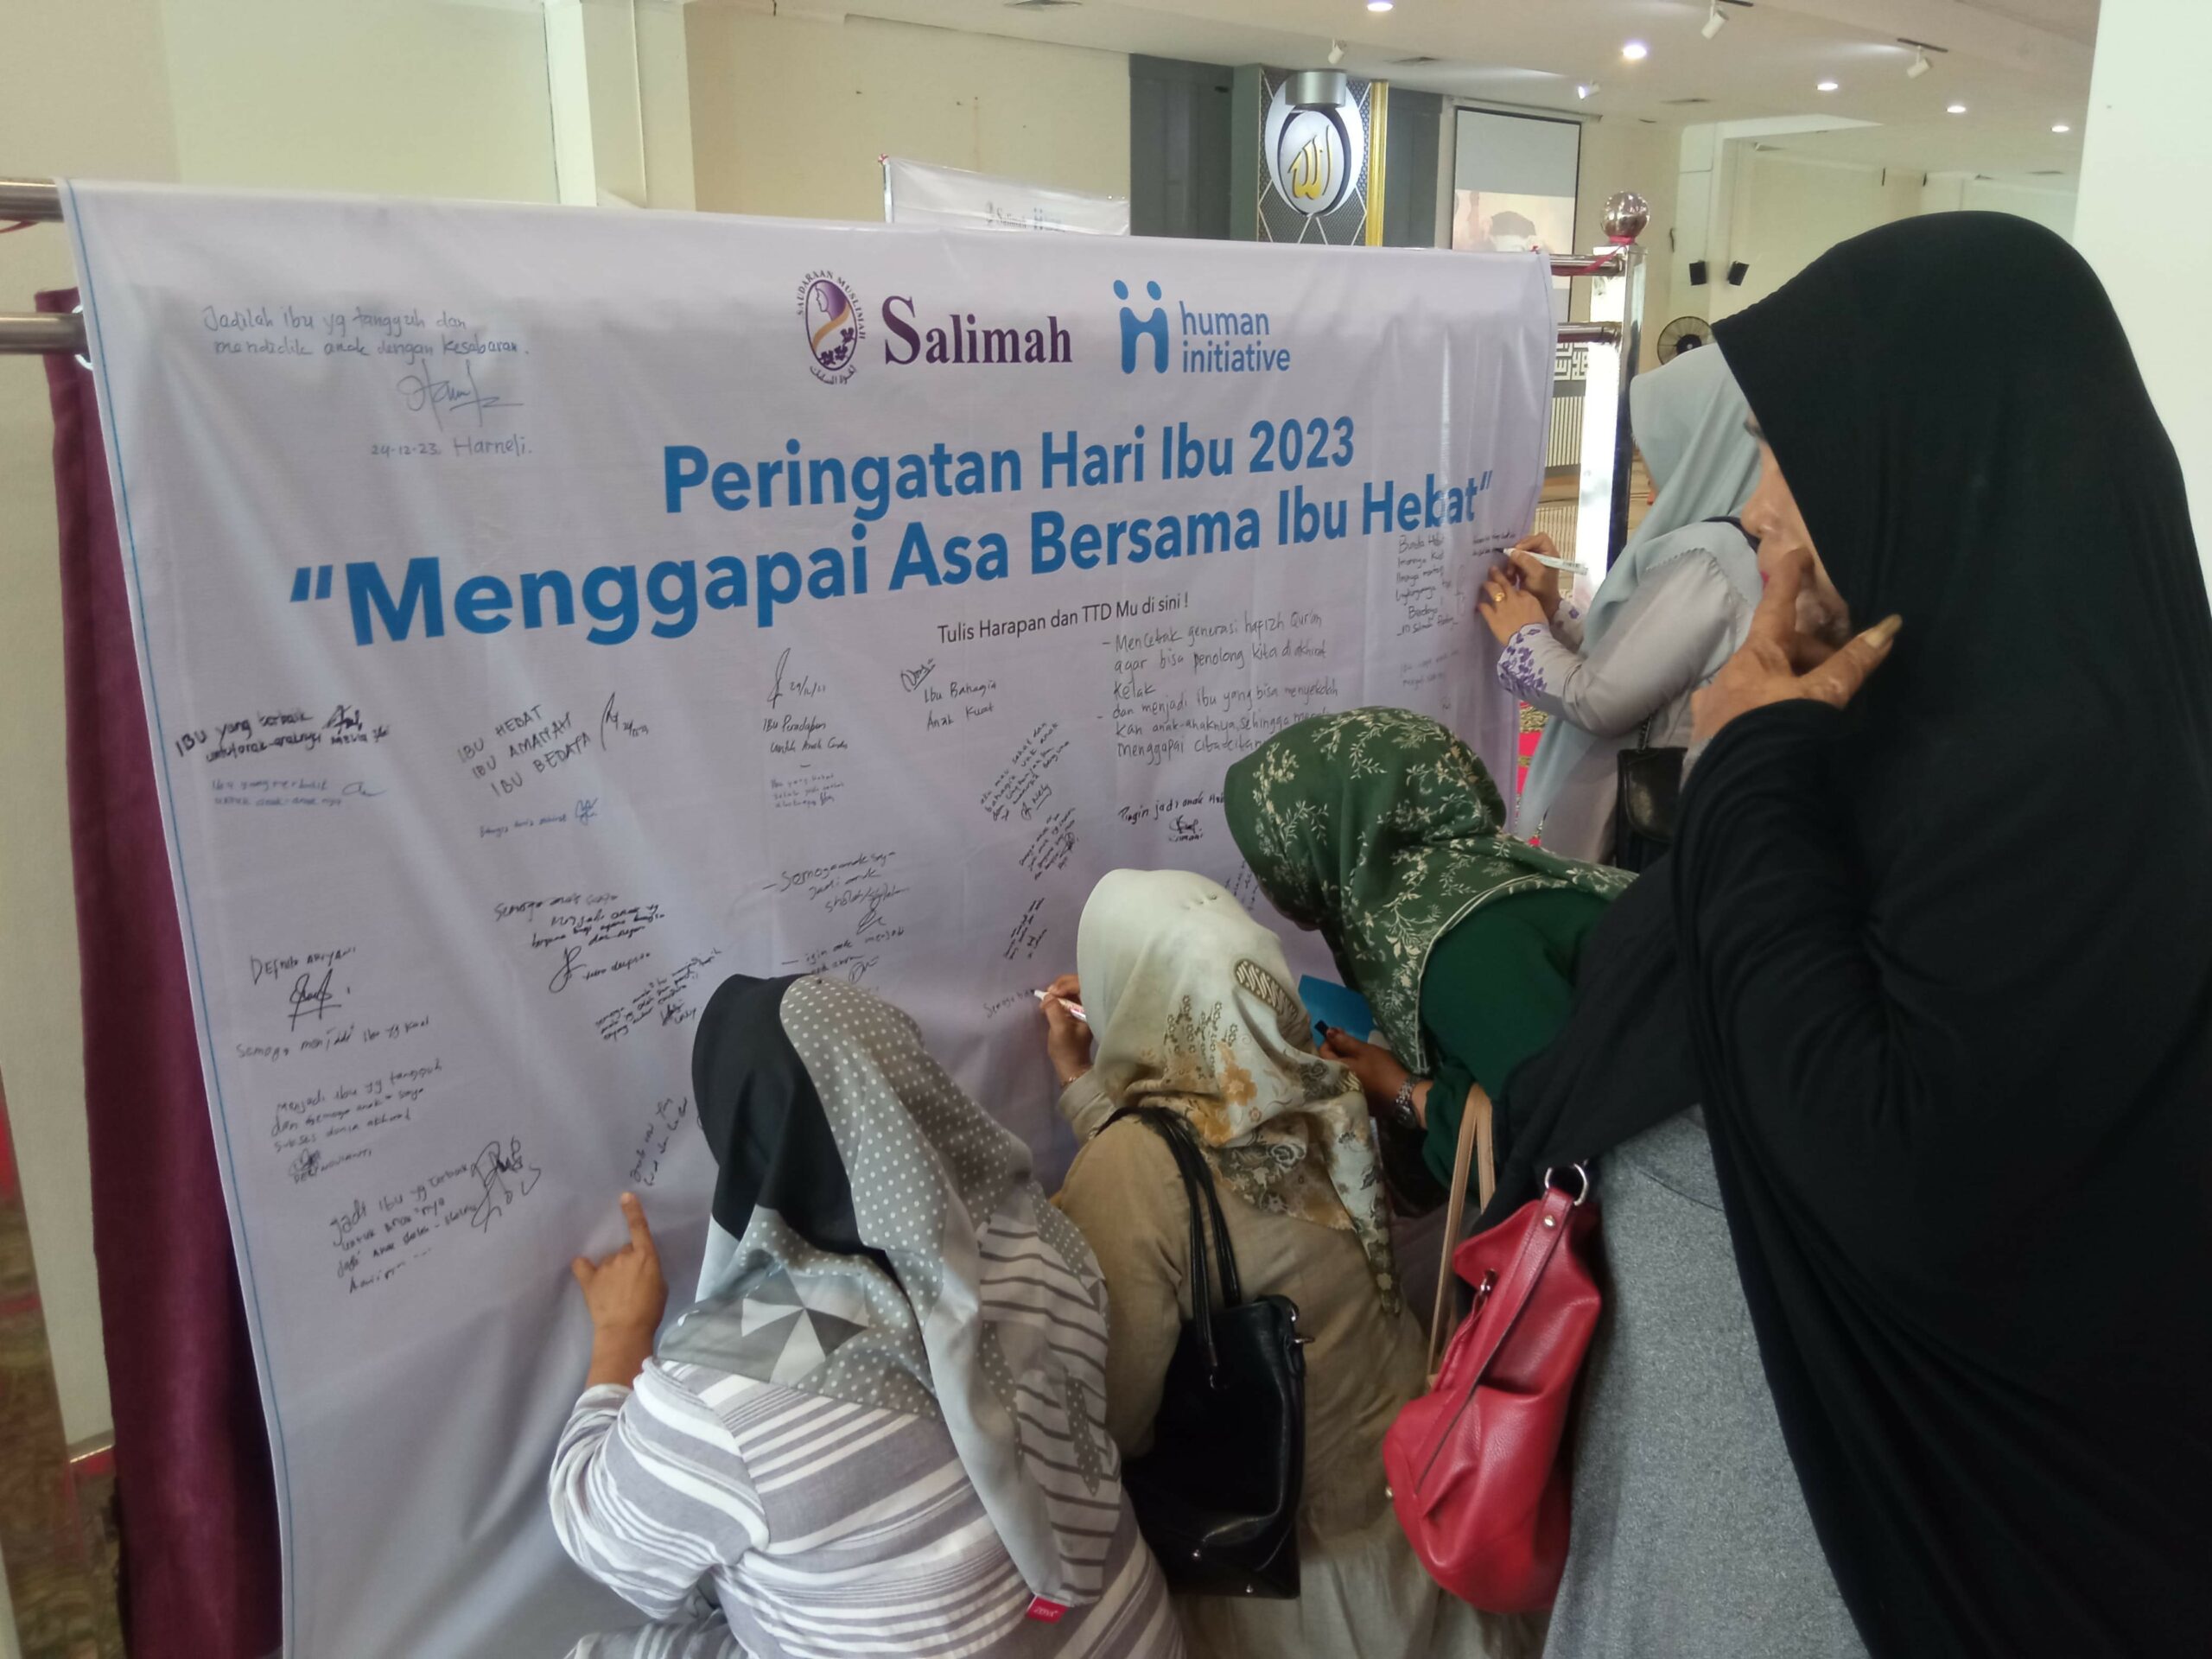 Human Initiative and Salimah Padang Host Parenting Seminar for Single Moms in West Sumatra